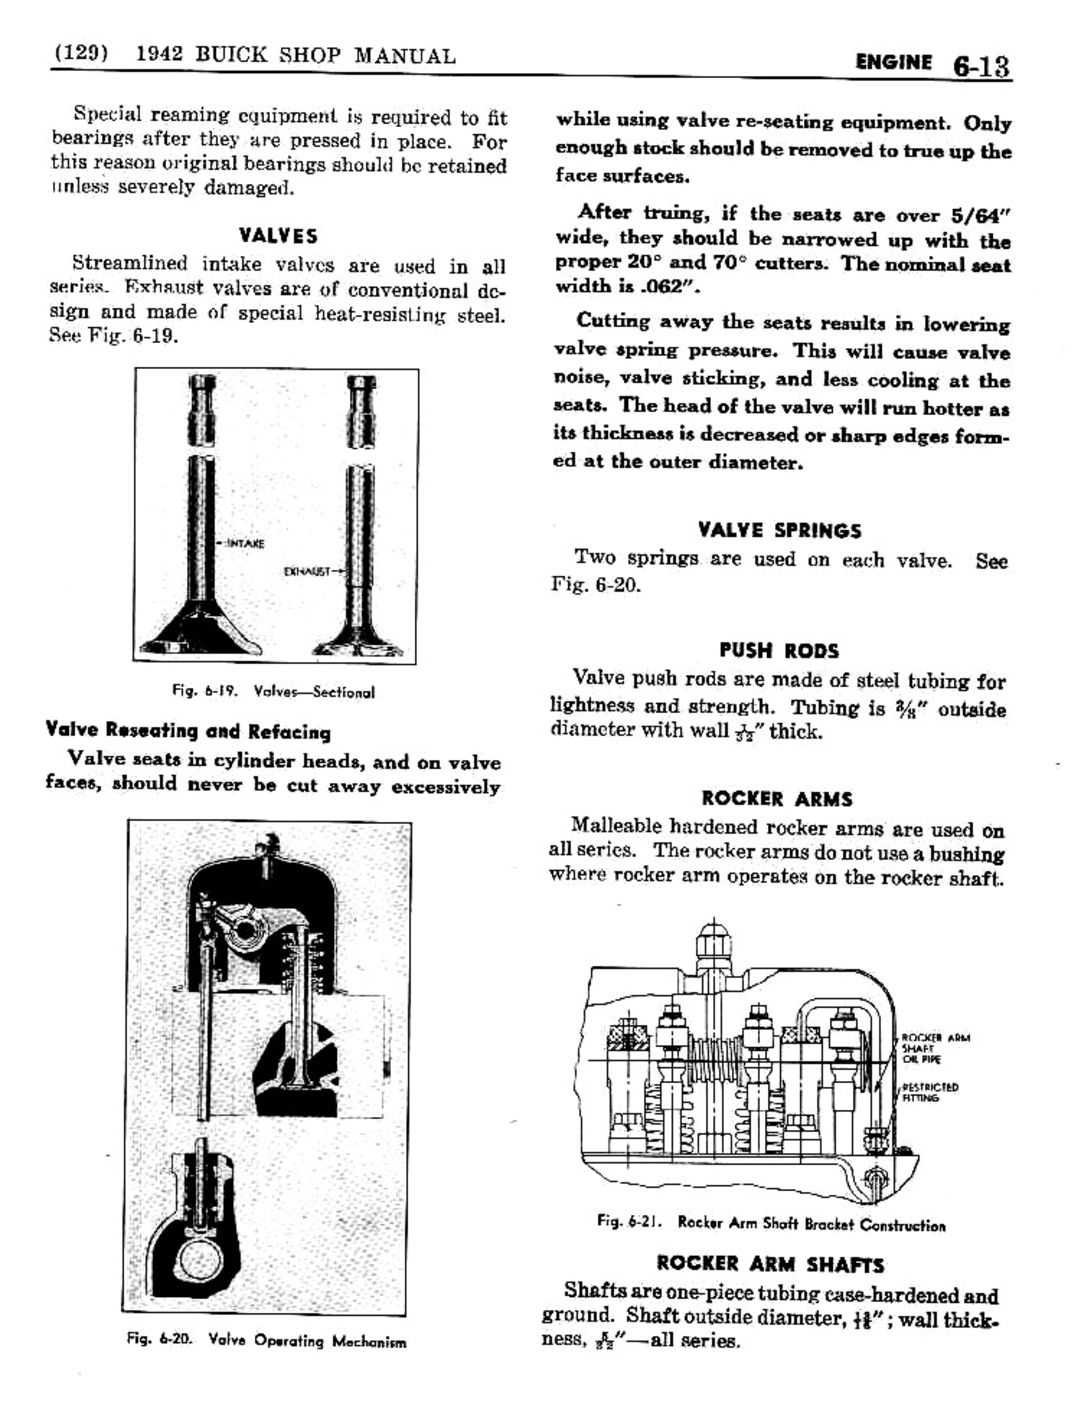 n_07 1942 Buick Shop Manual - Engine-013-013.jpg